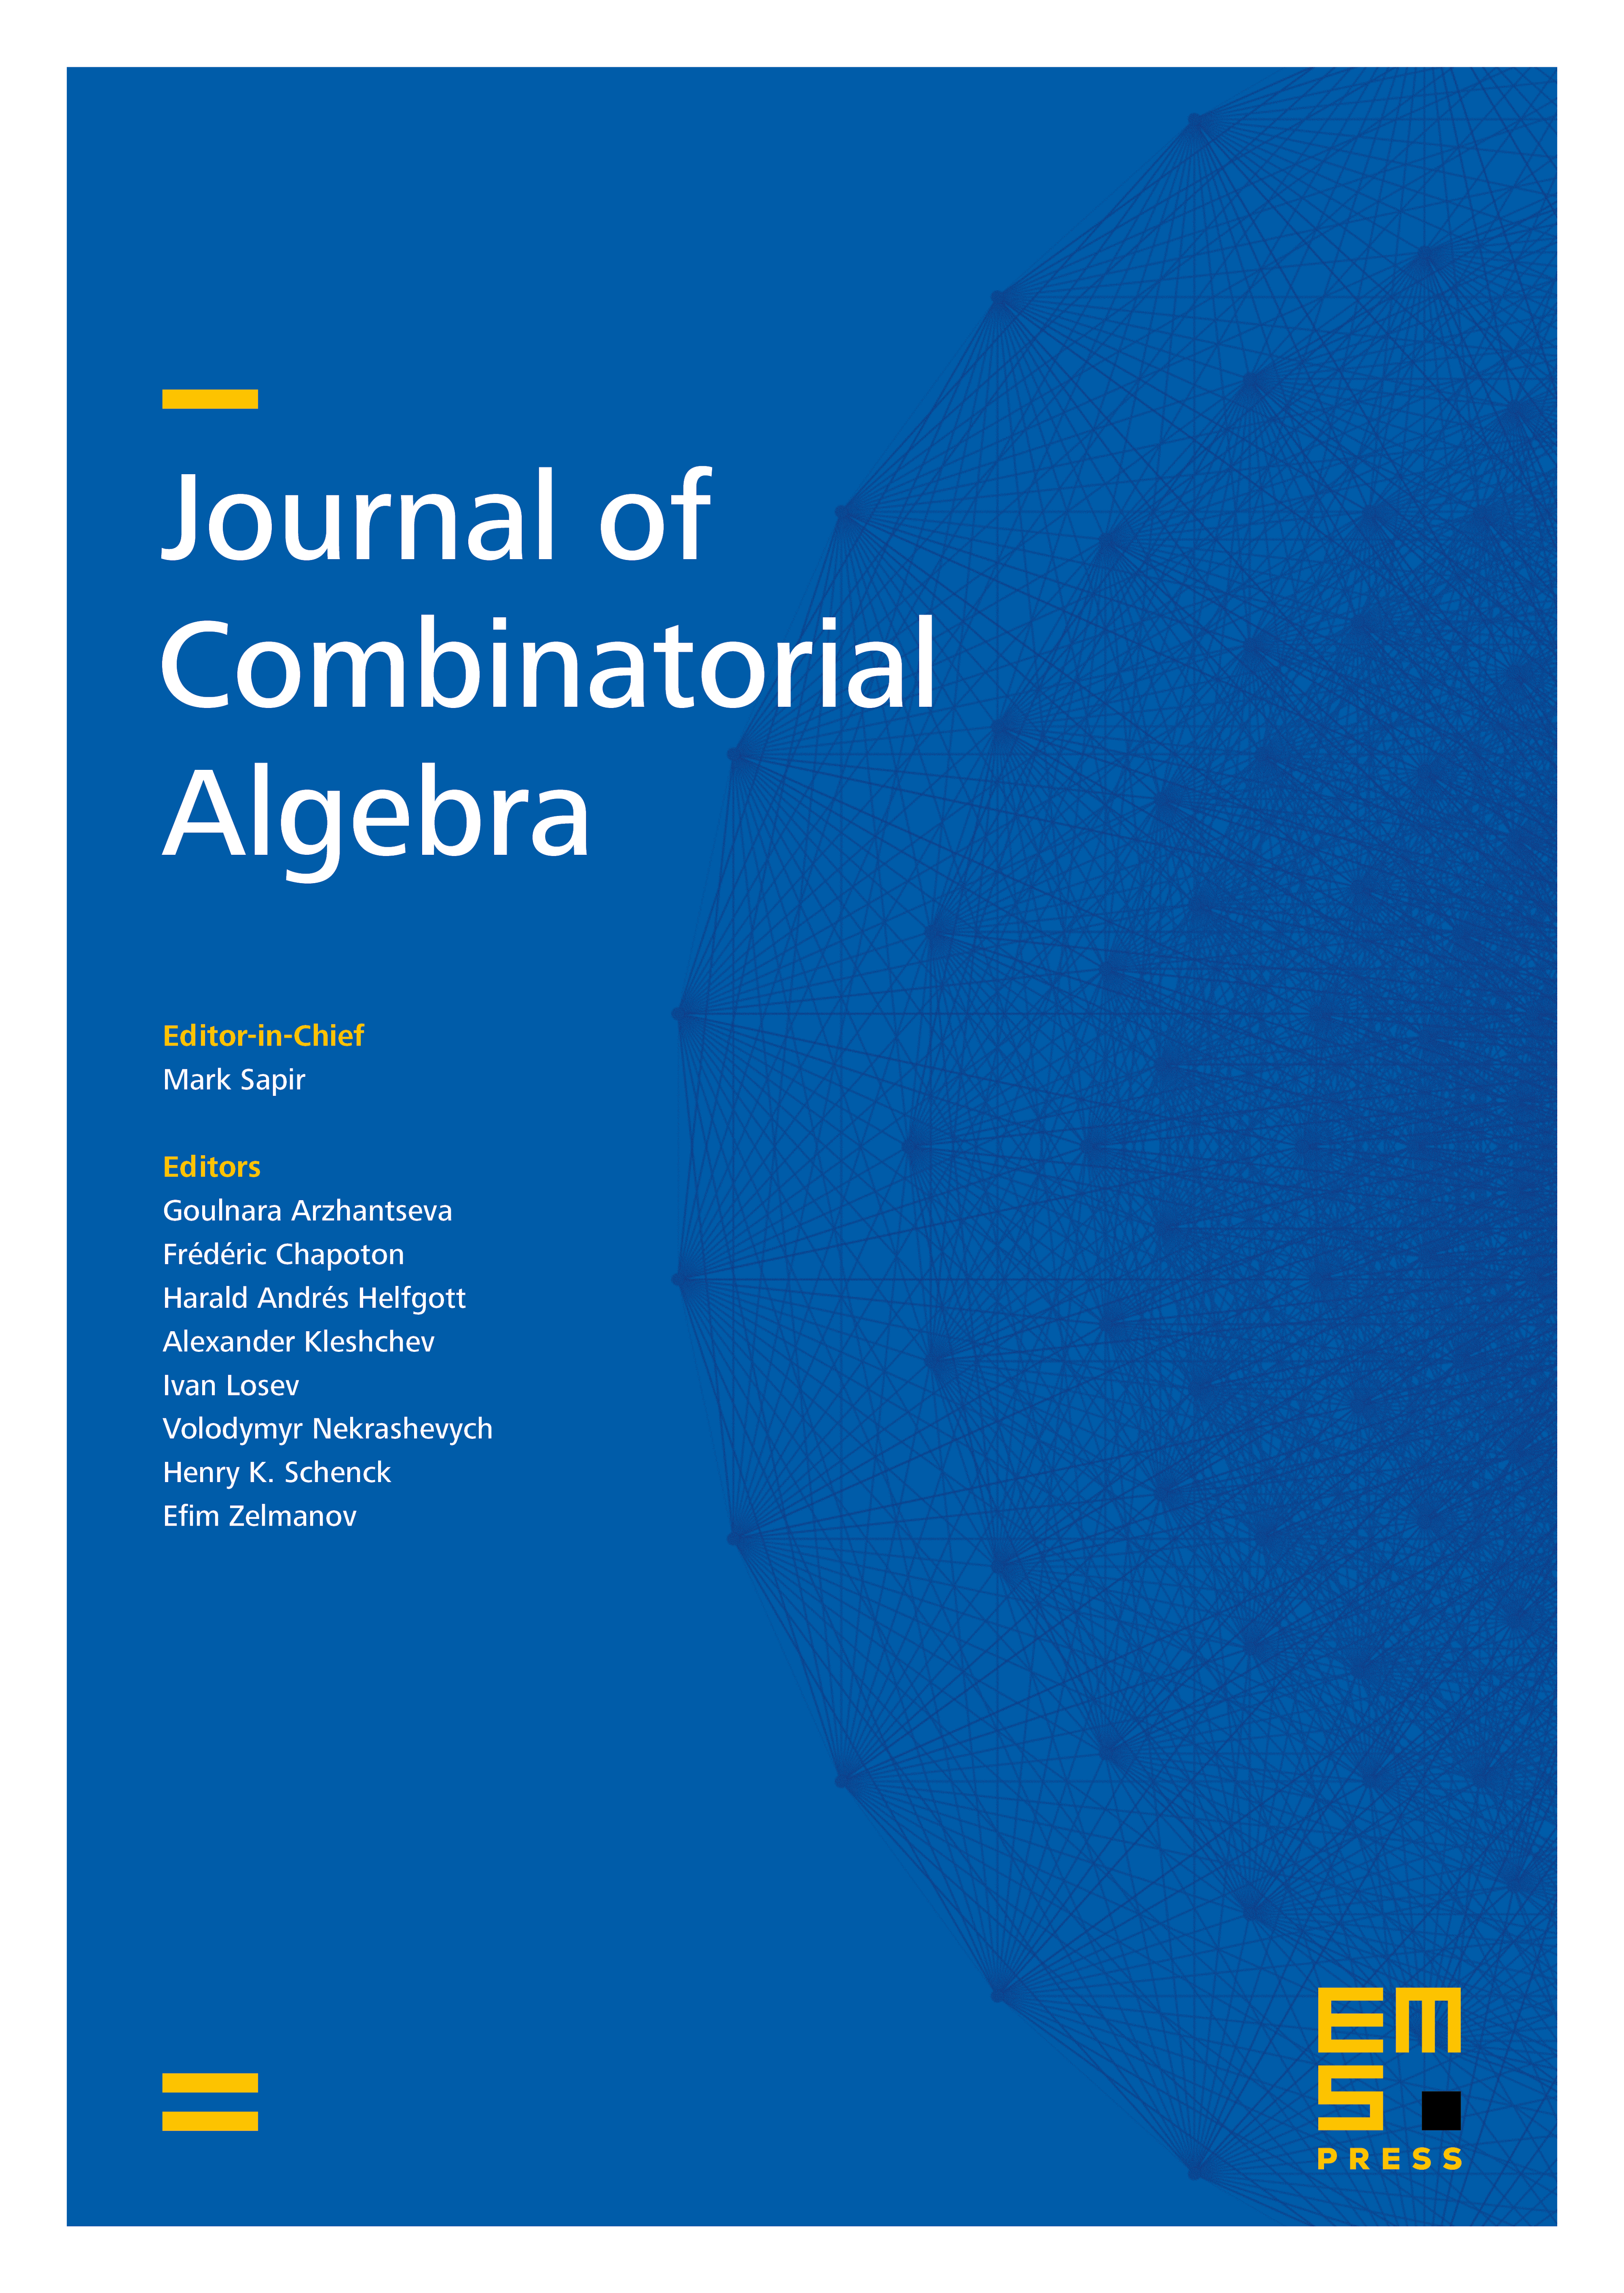 J. Comb. Algebra cover